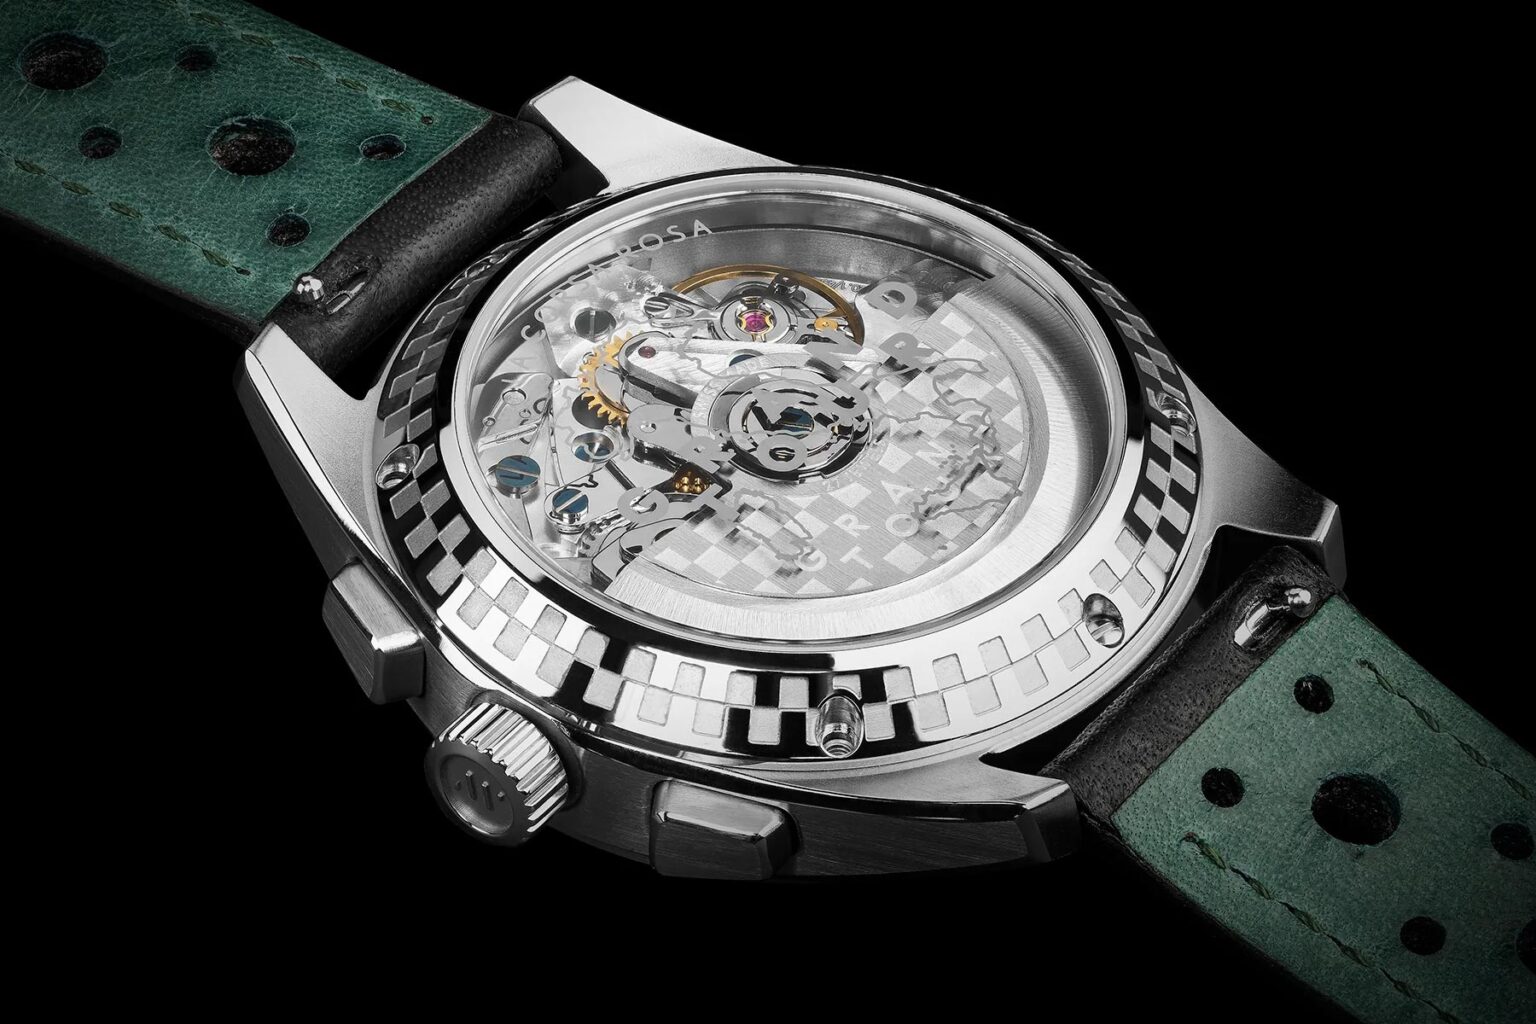 Bravur La Corsa Rosa IV luxury handmade mechanical chronograph watch celebrates Giro d'Italia, sapphire back exposes the watch movement